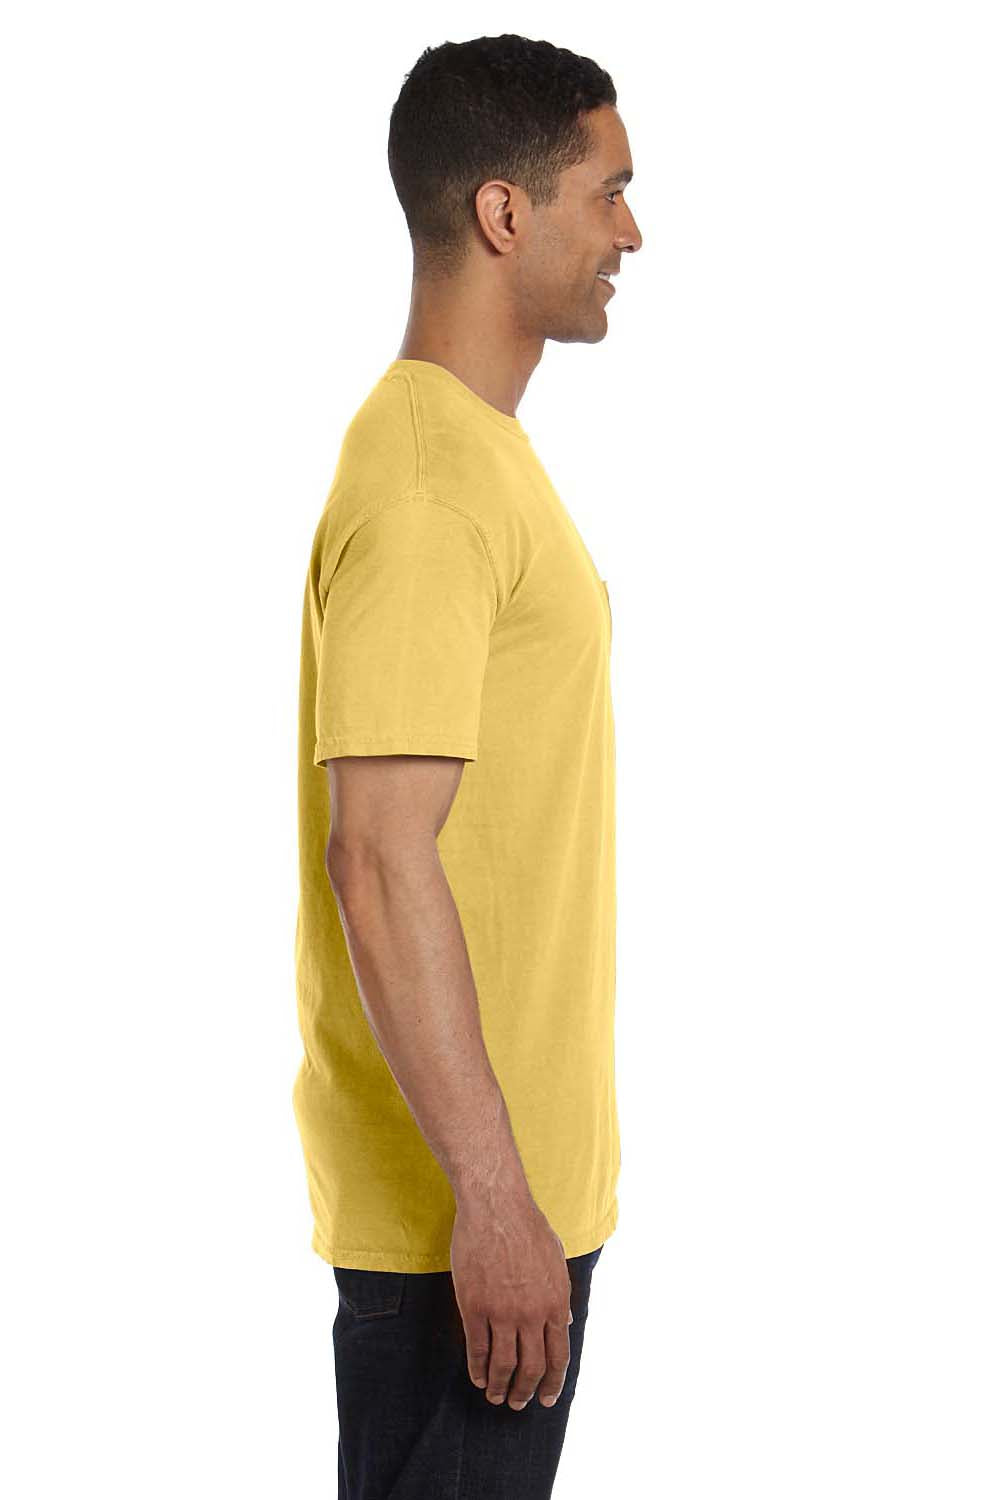 Comfort Colors 6030CC Mens Short Sleeve Crewneck T-Shirt w/ Pocket Mustard Yellow Side